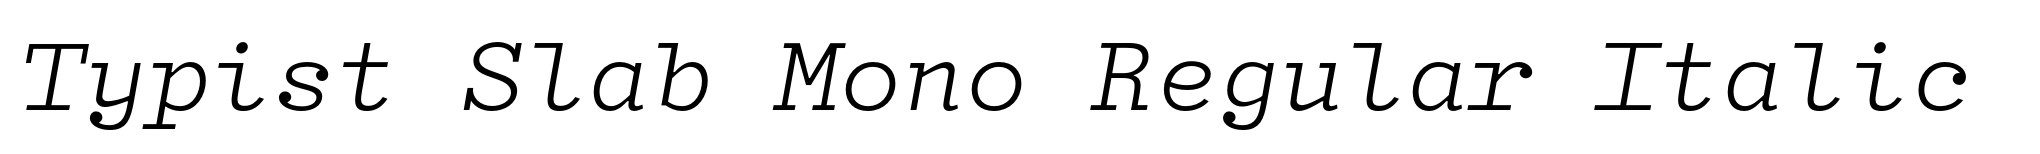 Typist Slab Mono Regular Italic image